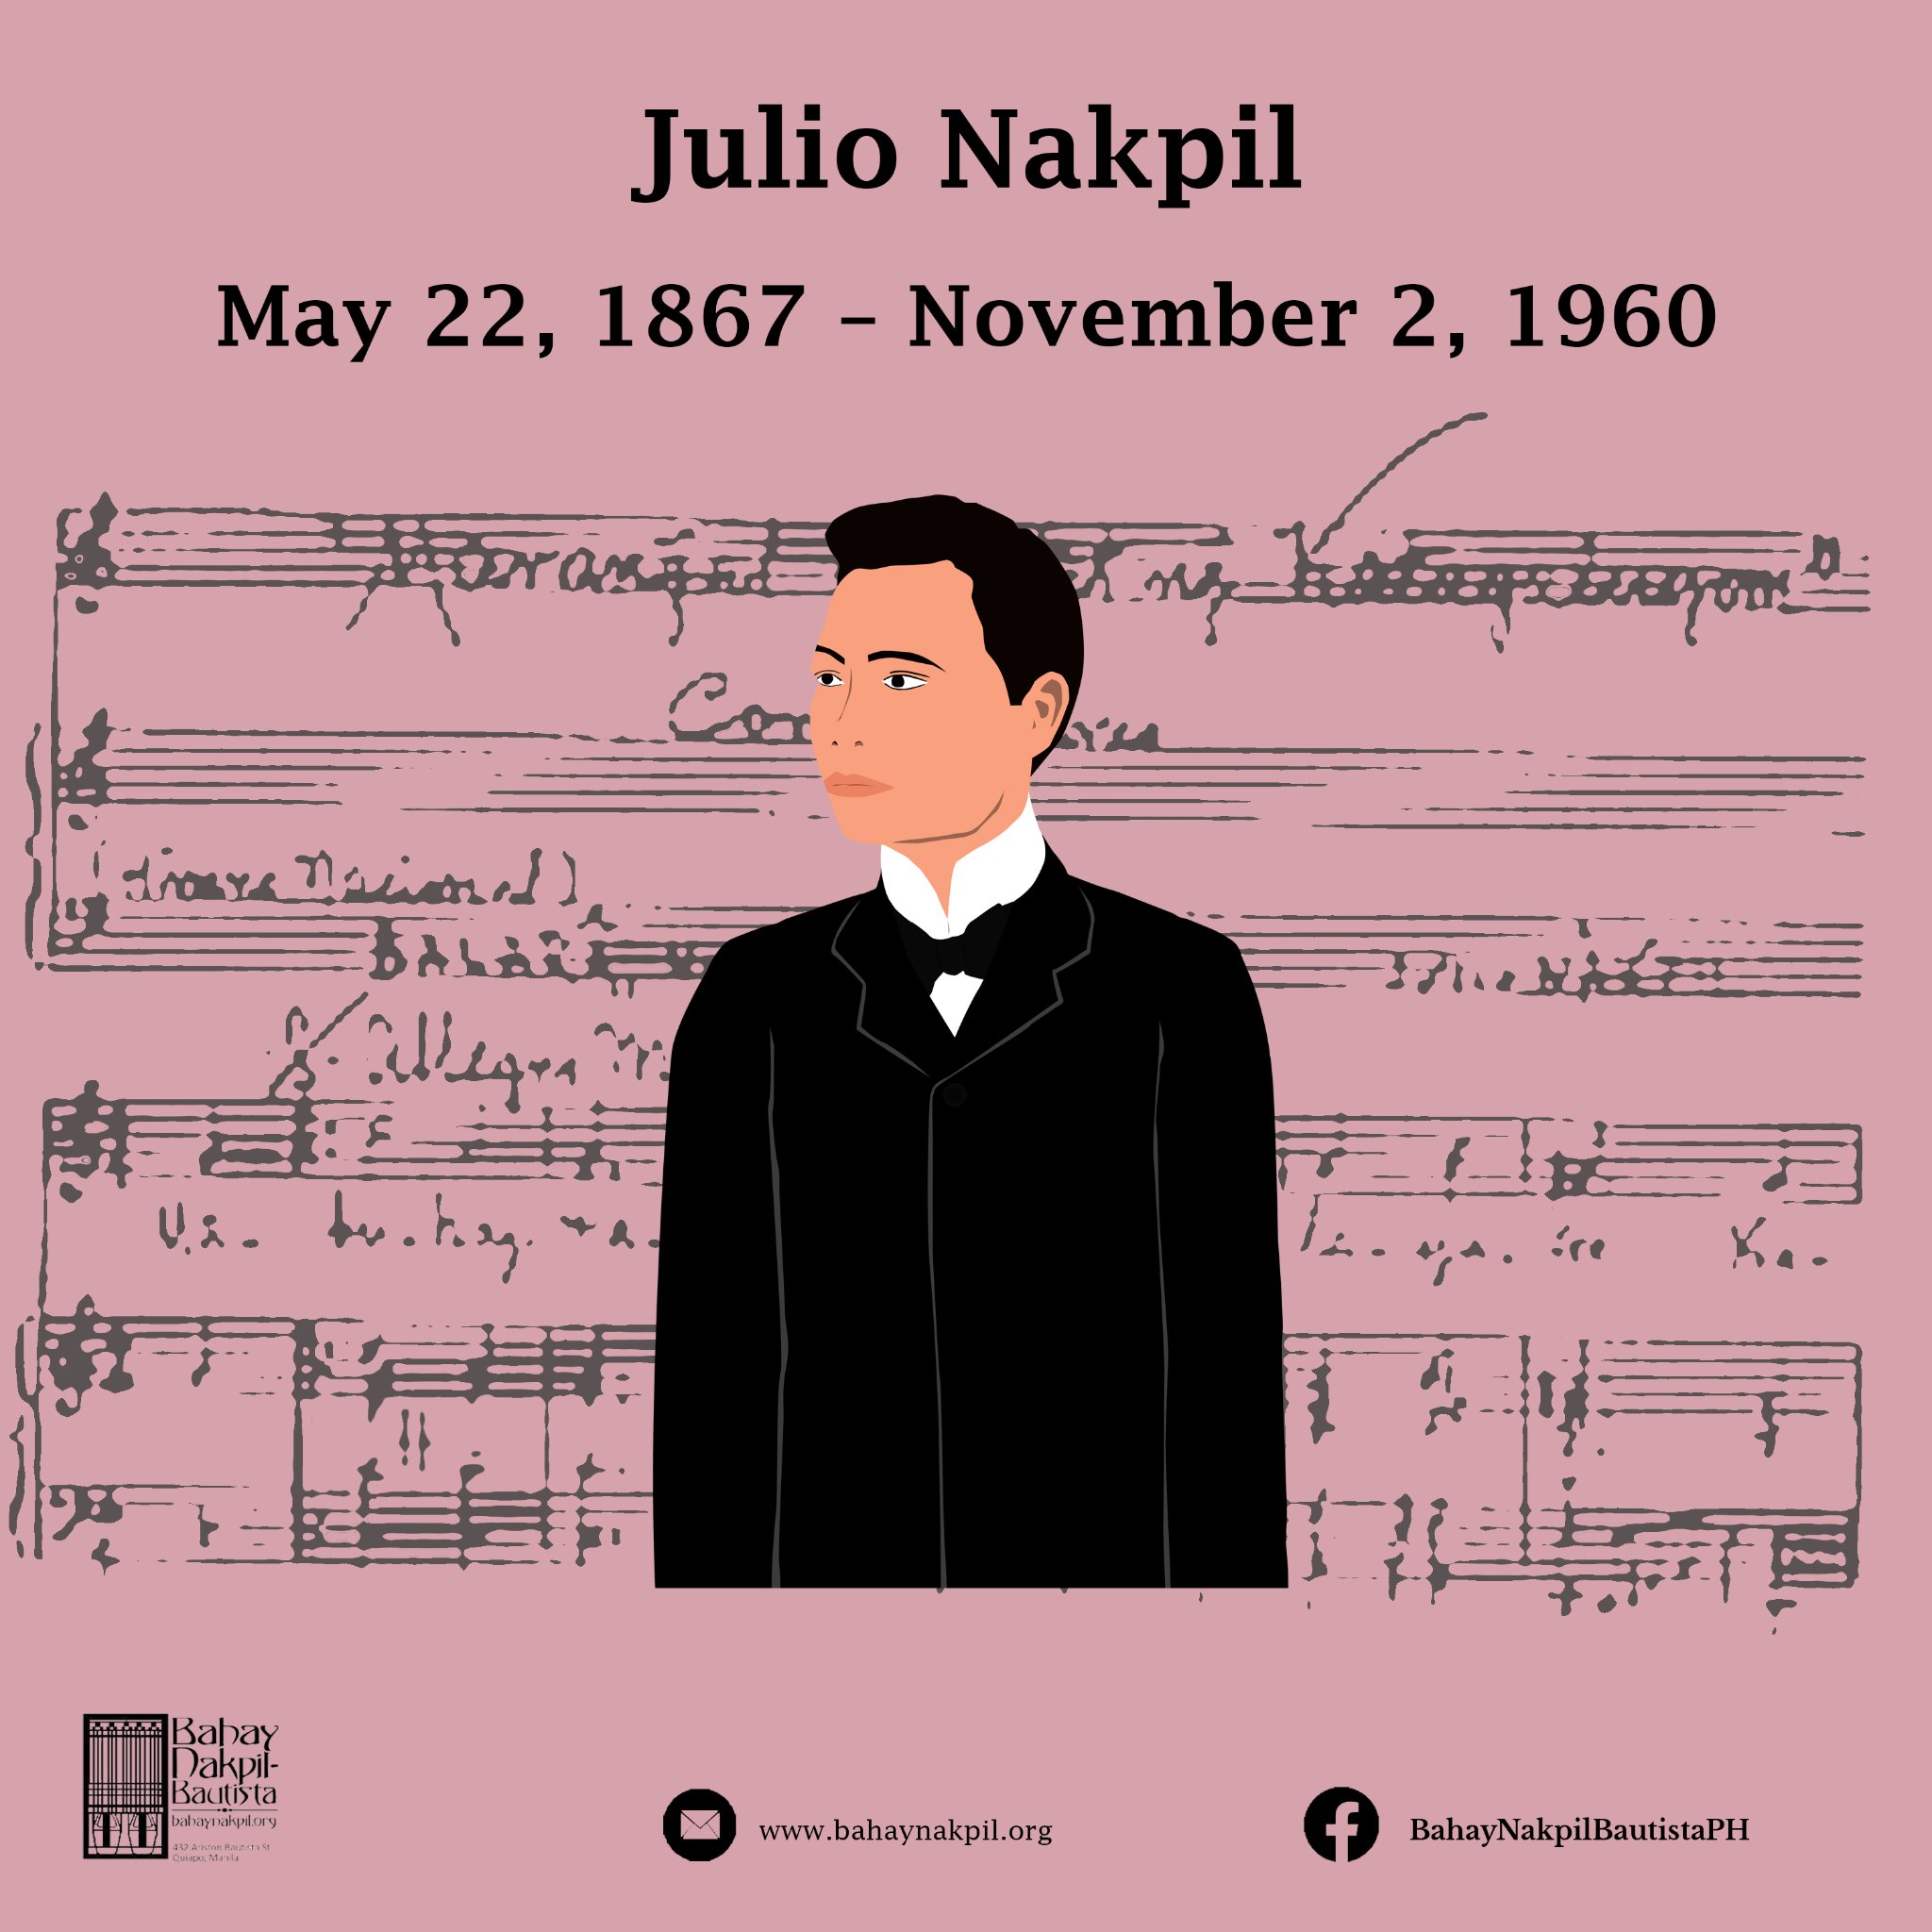 20220522 Julio Nakpil 155th birthday